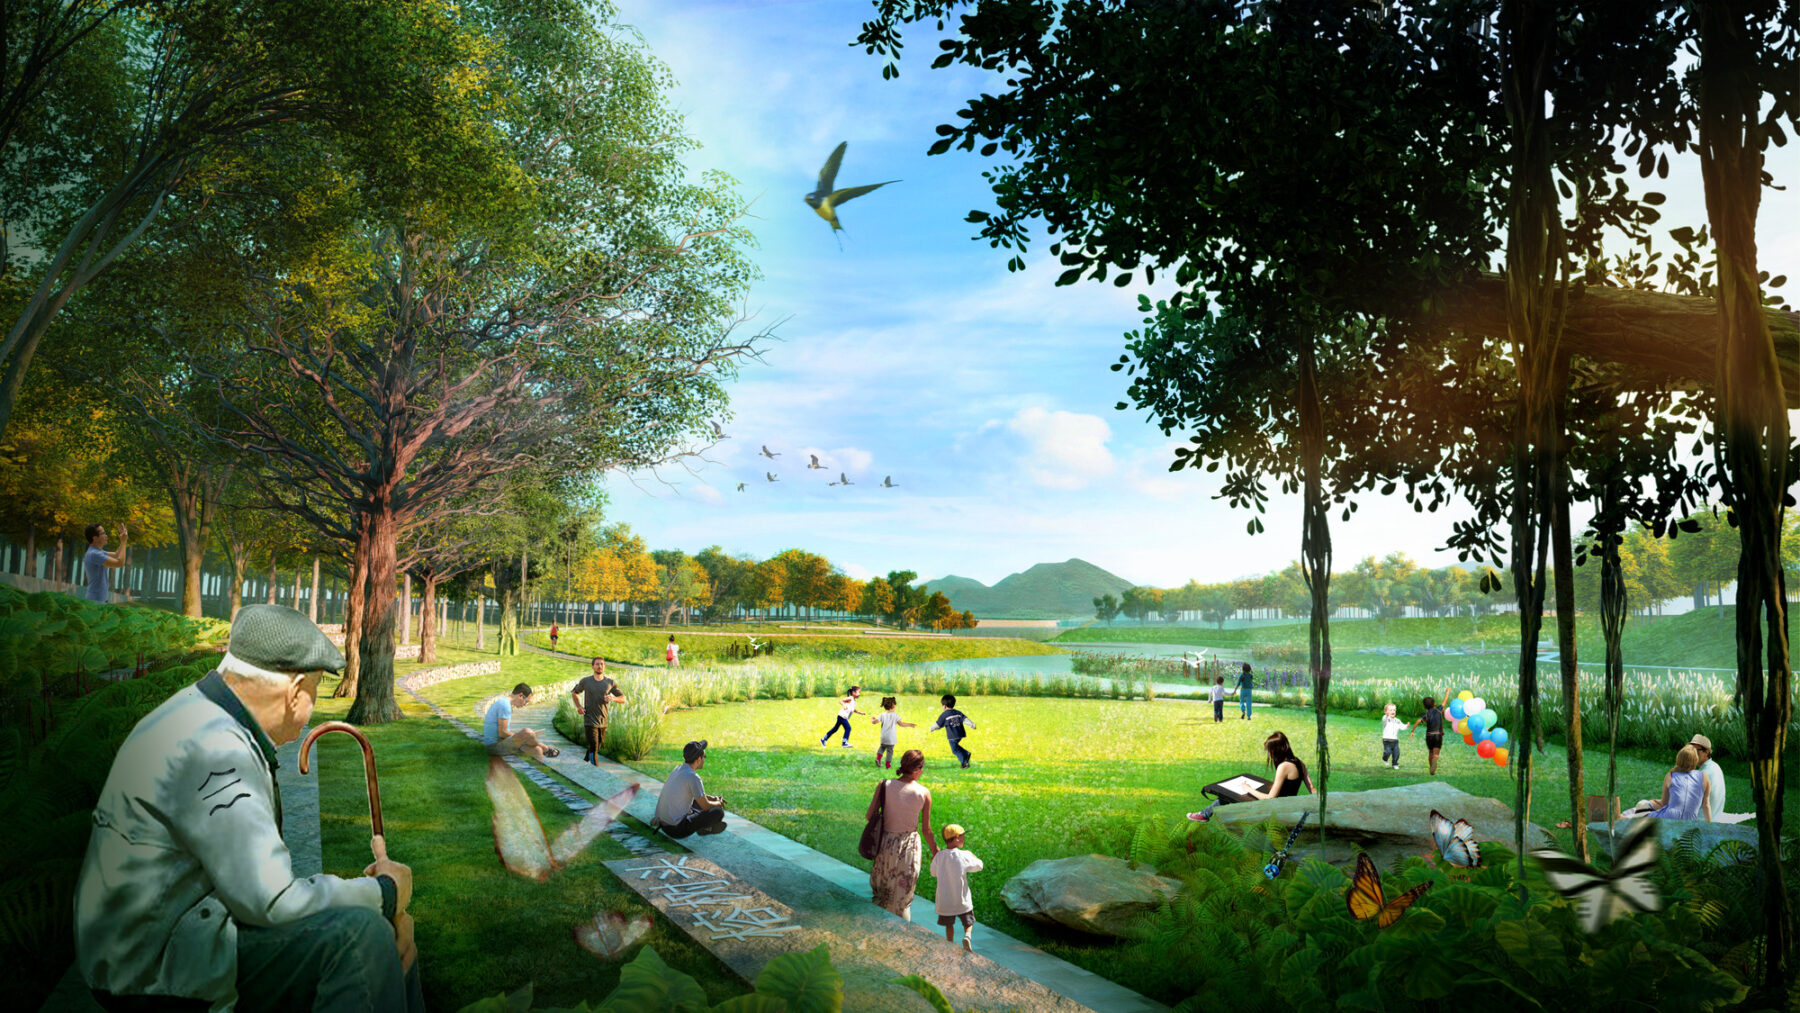 rendering of people enjoying open field along Pingshan River Blueway